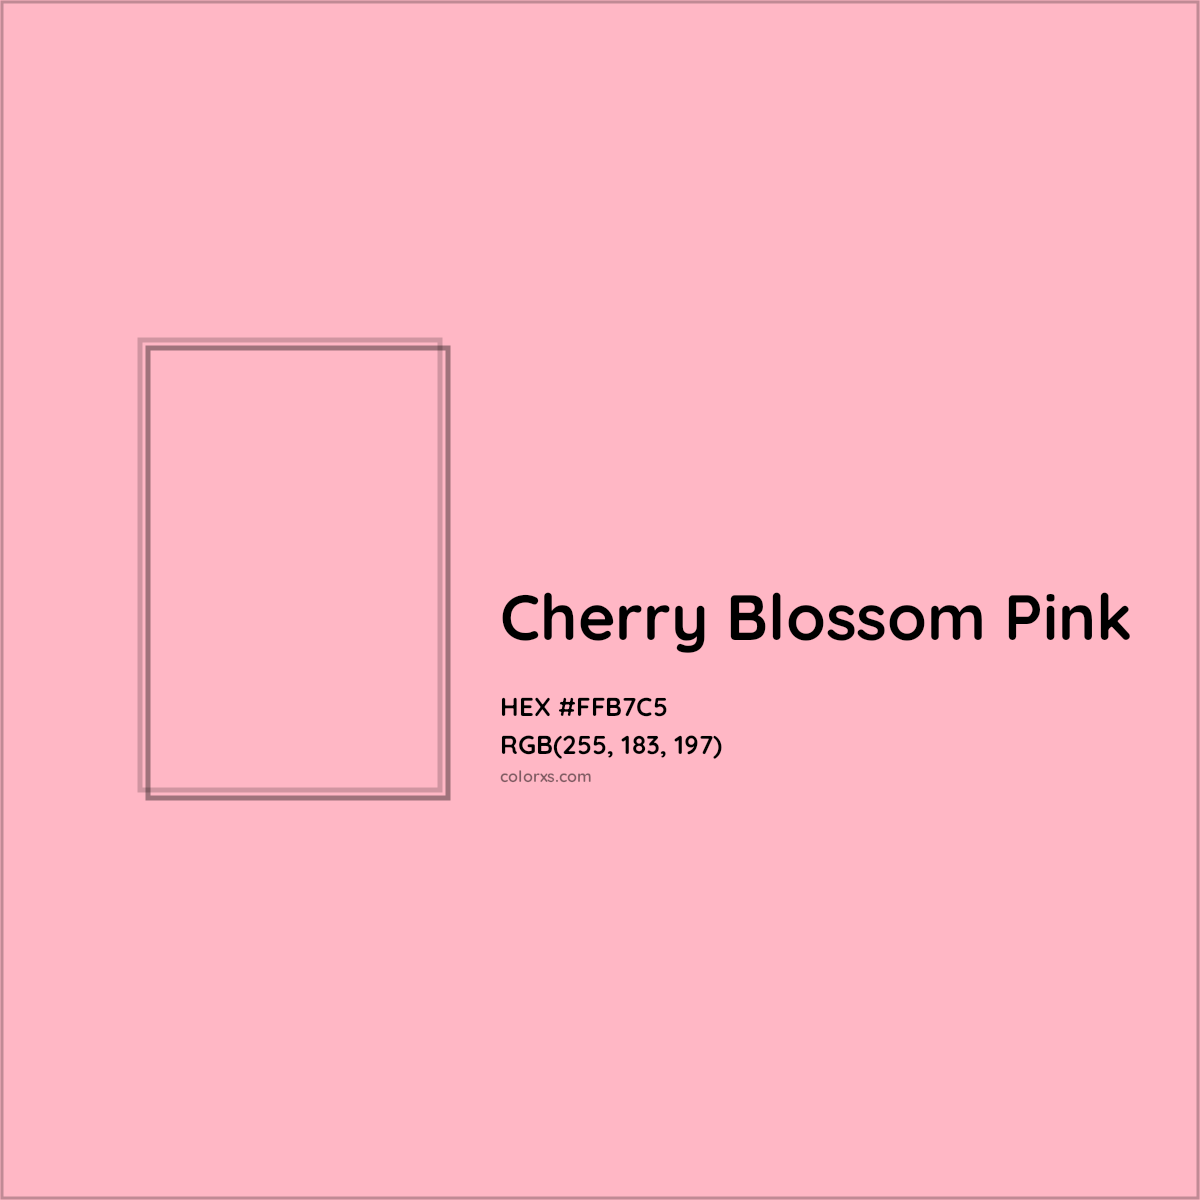 7. Sakura Hauno Nail Color in "Cherry Blossom Garden" shade - wide 4